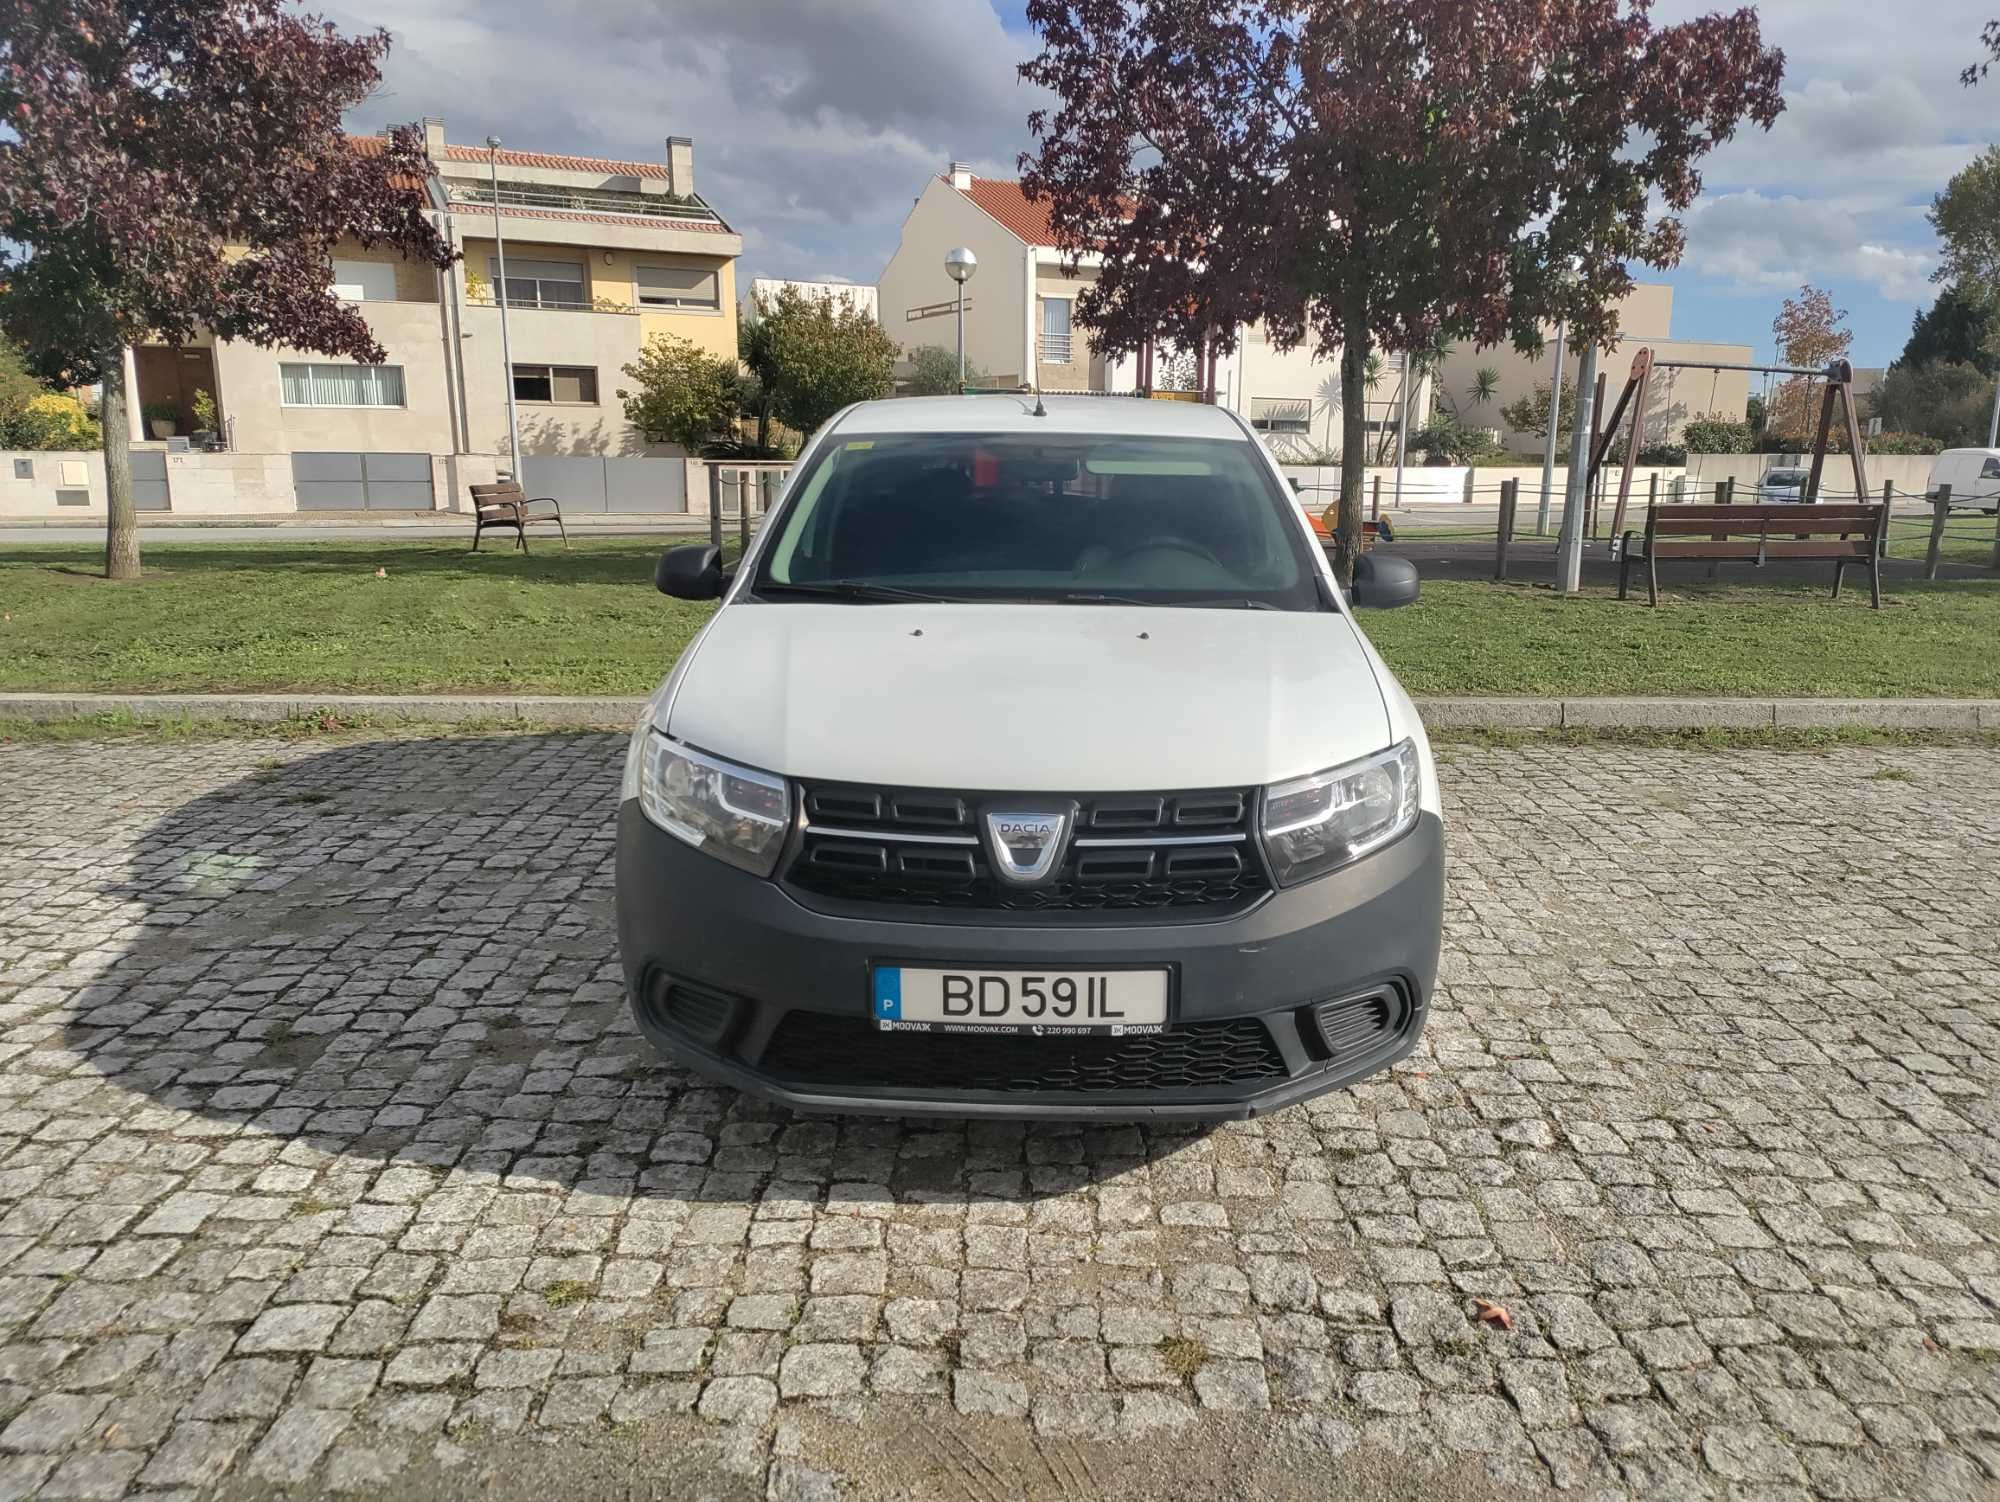 Dacia Sandero 2017 - 73cv Gasolina - 142,000 kms - Rdio Android